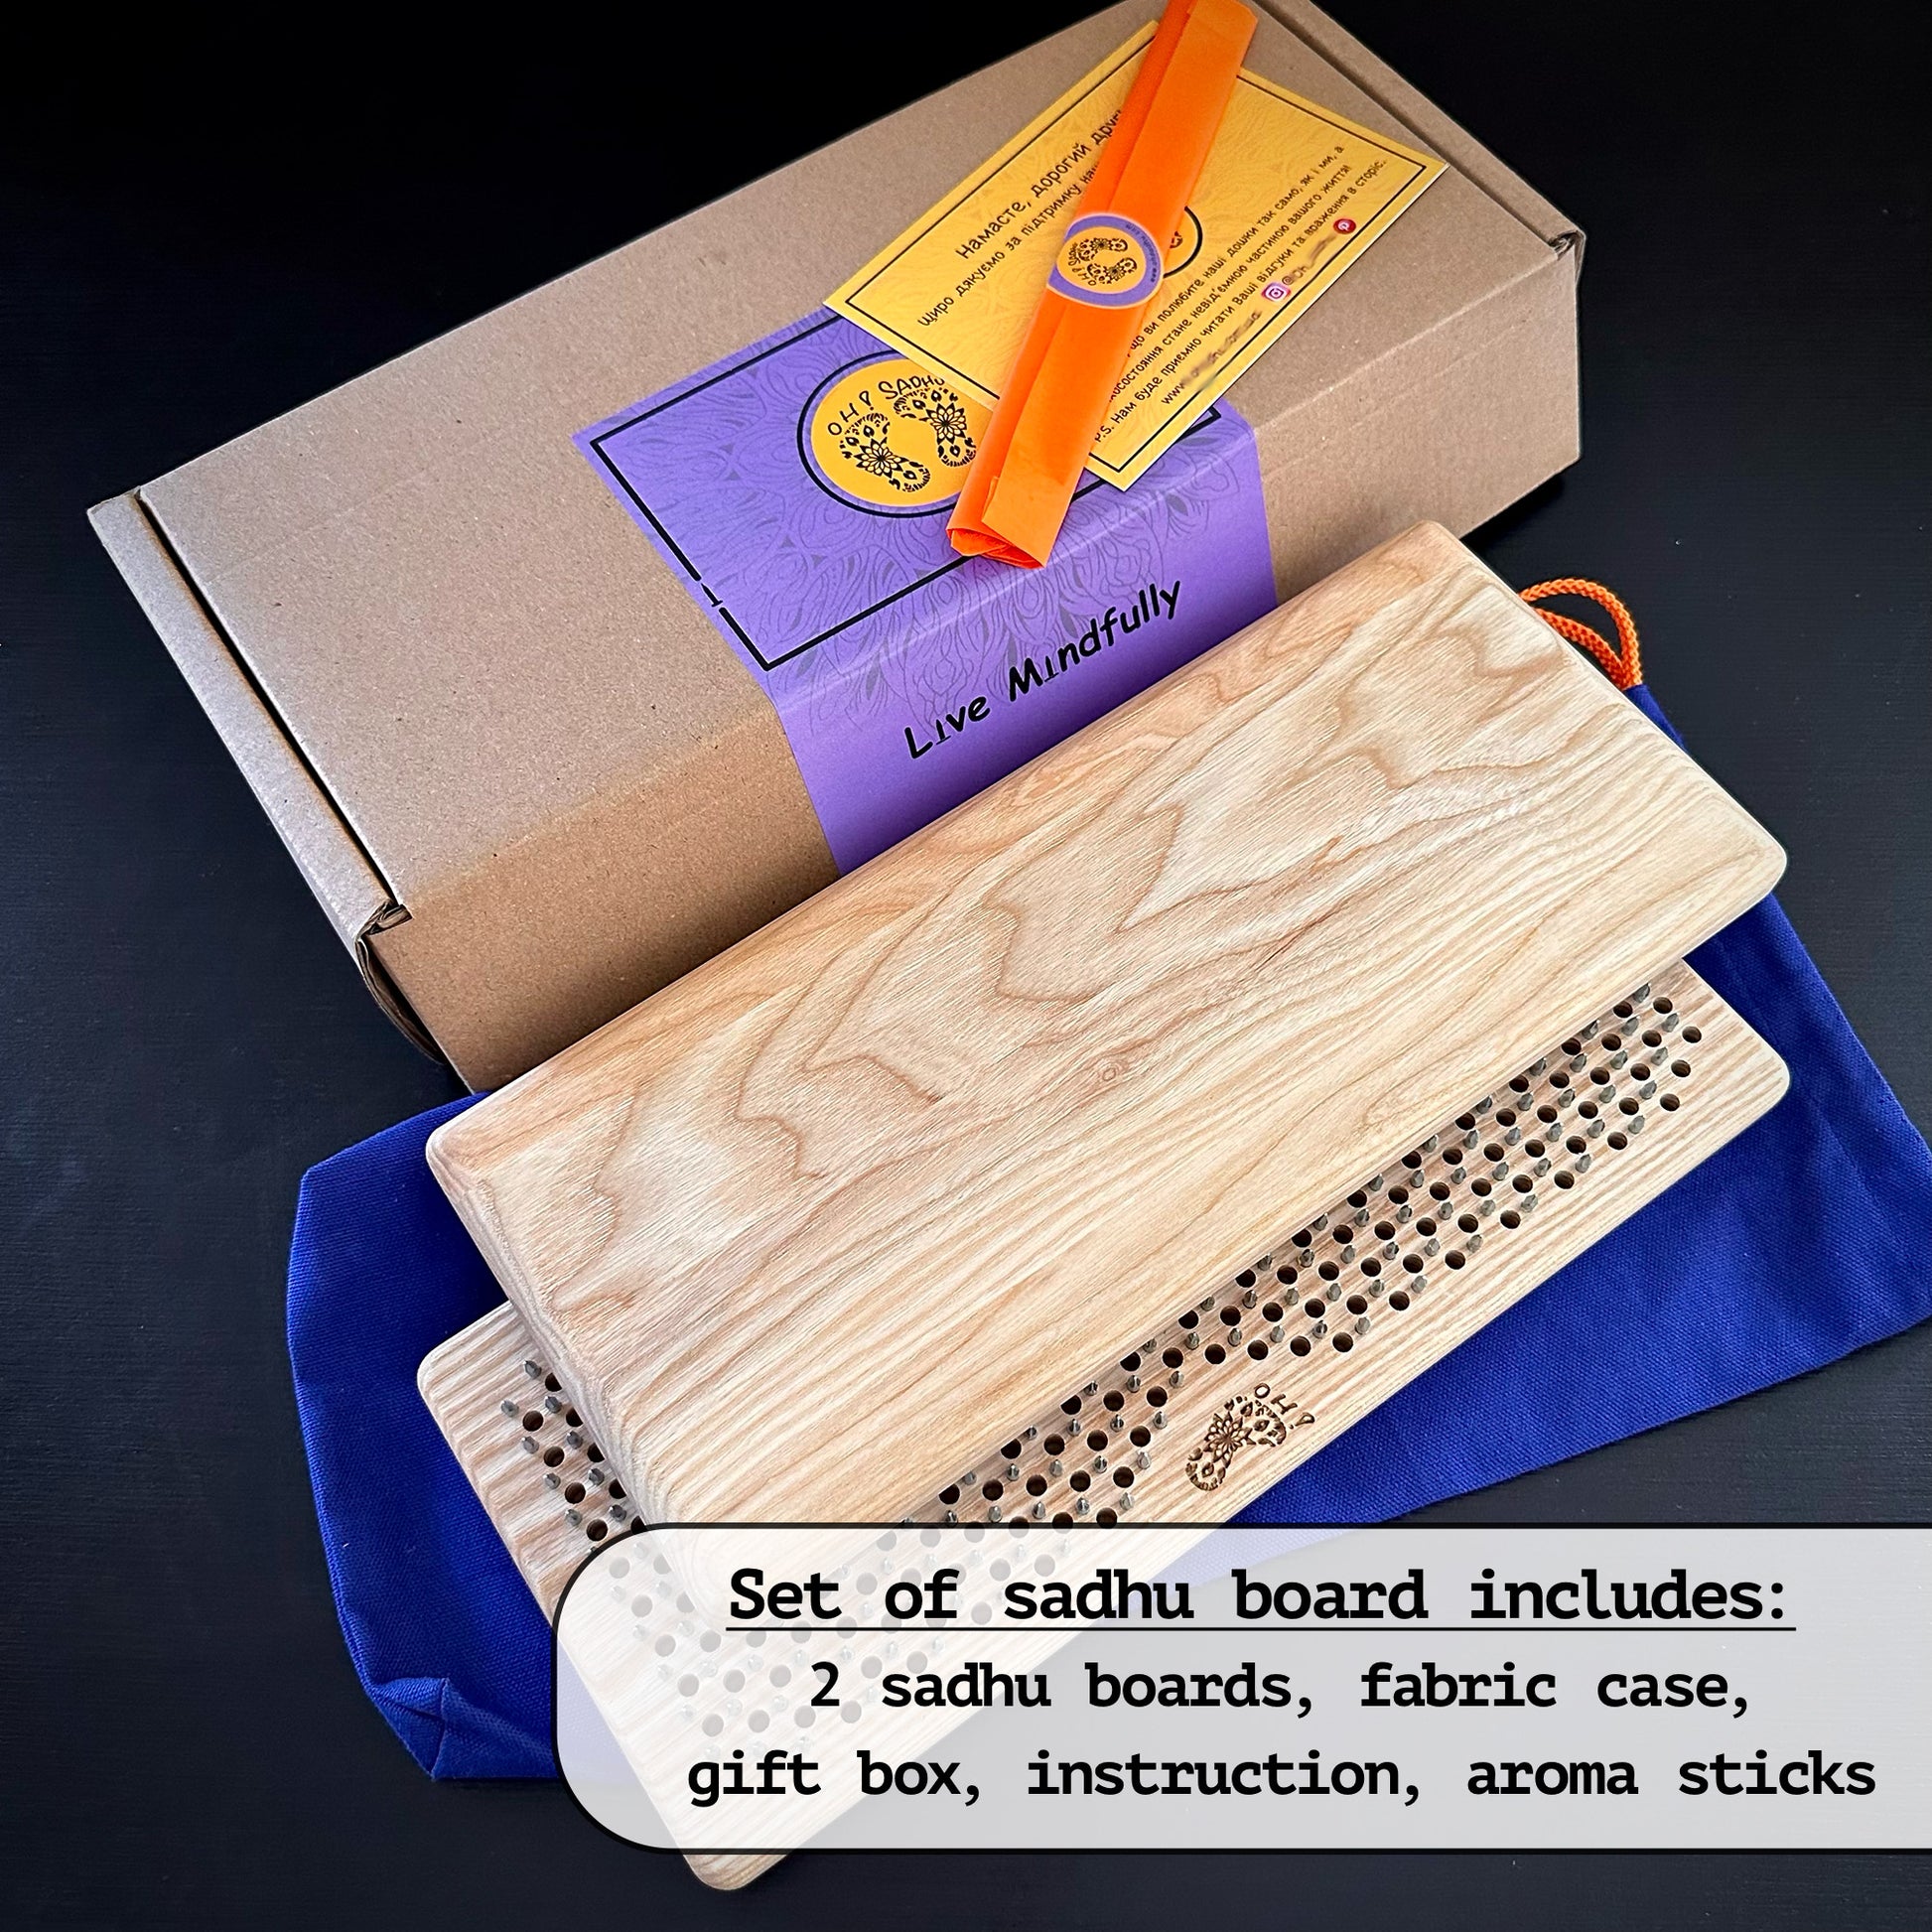 sadhu board set includes gift box, pouch, 2 sadhu boards, aroma stick, instruction on black background